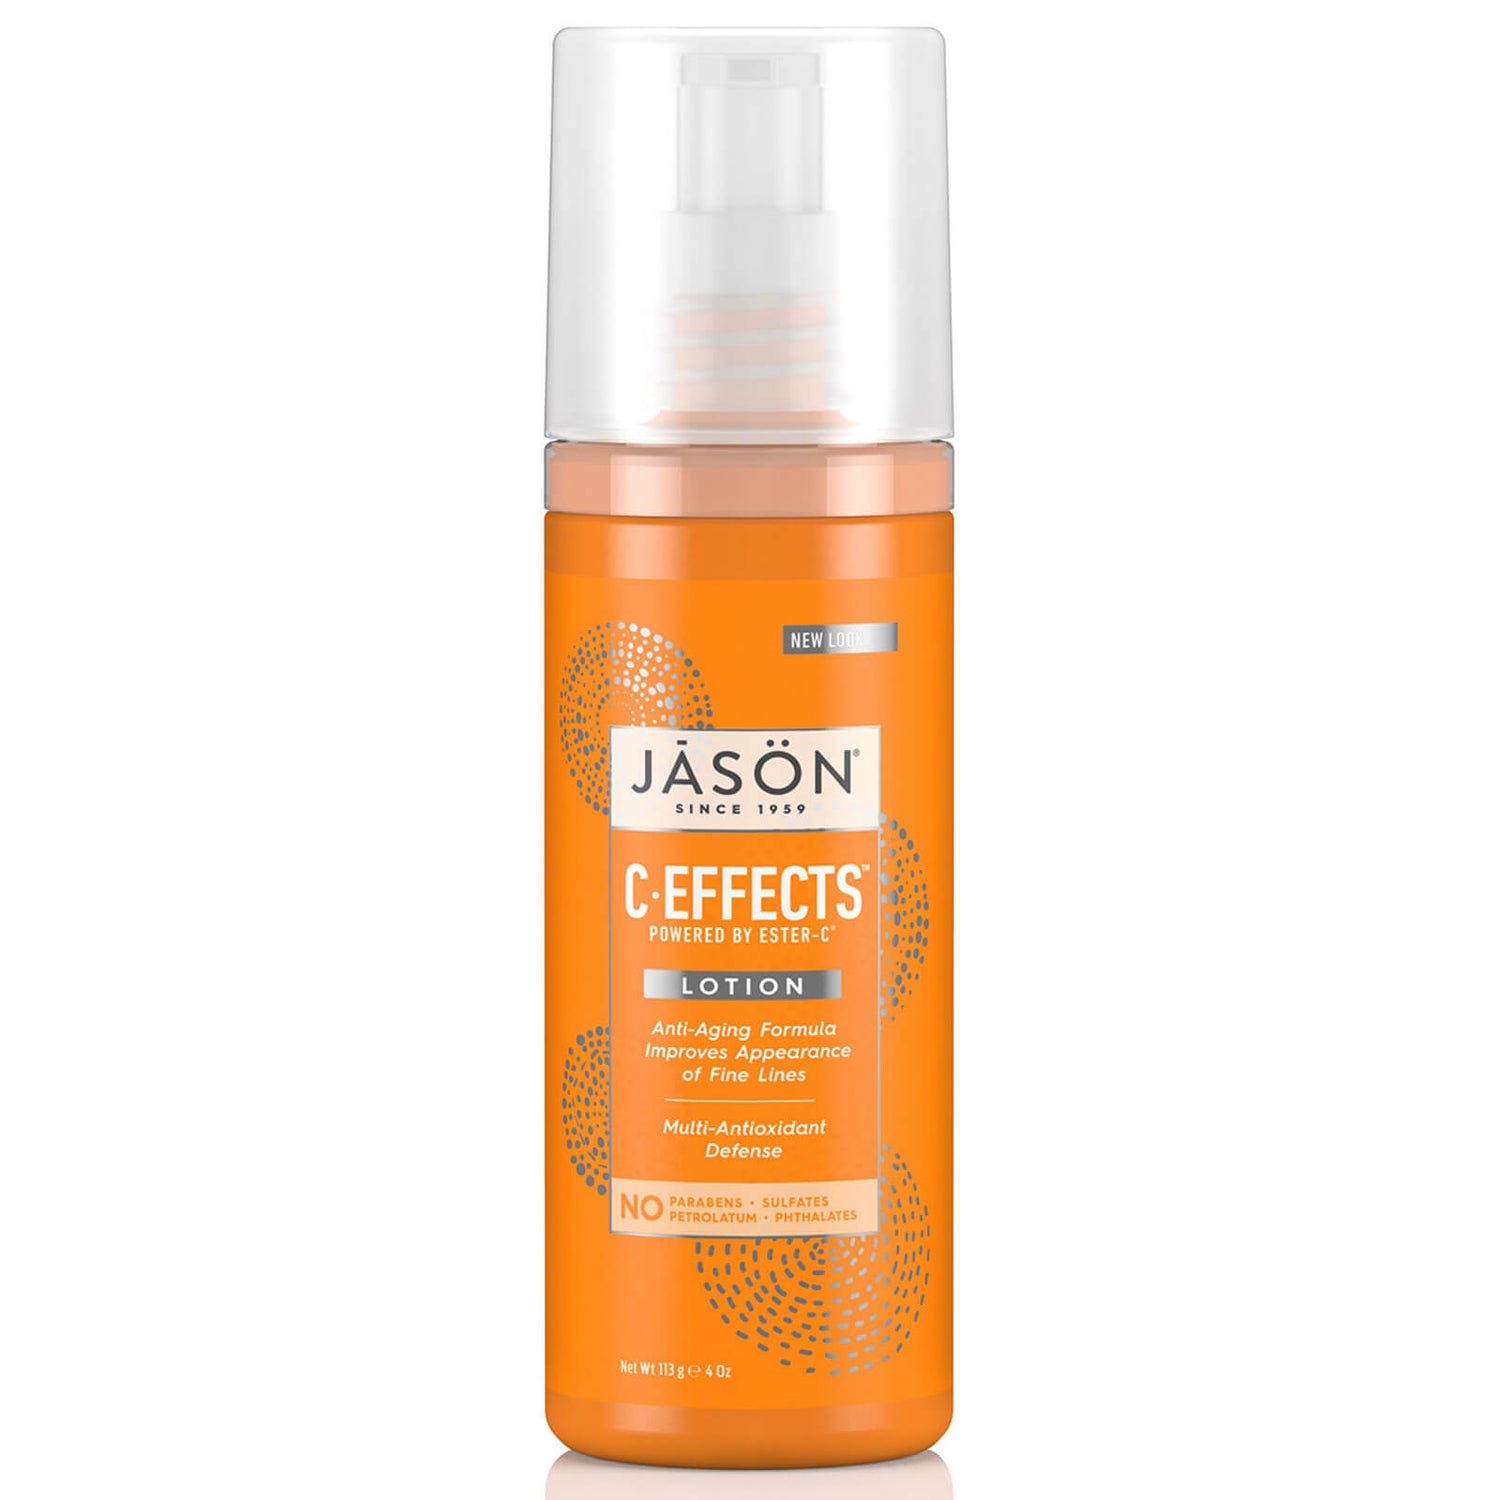 JASON C-Effects Lotion 113g